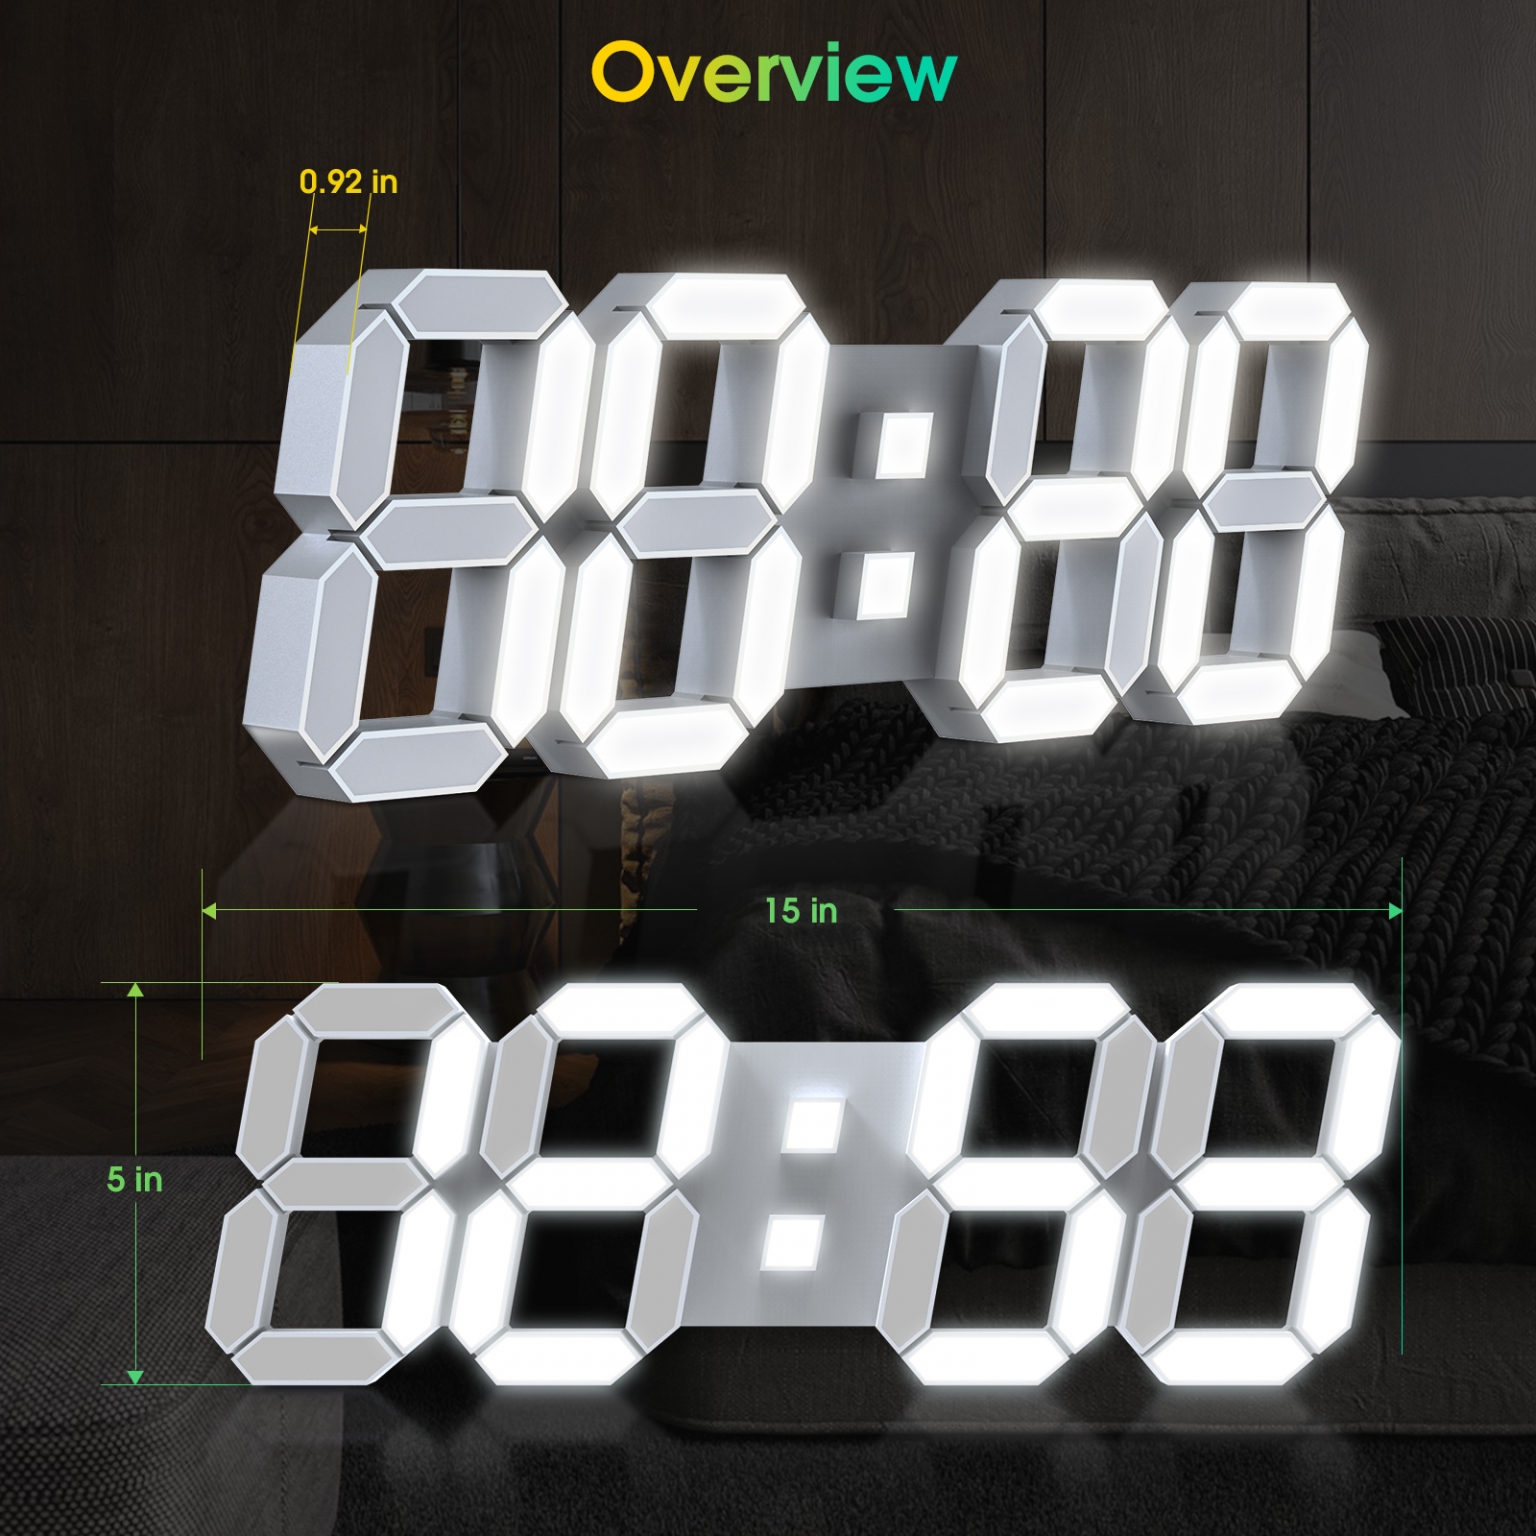 Edup Home 15 Large 3d Led Clock Digital Wall Alarm Clock With Remote Control Edup